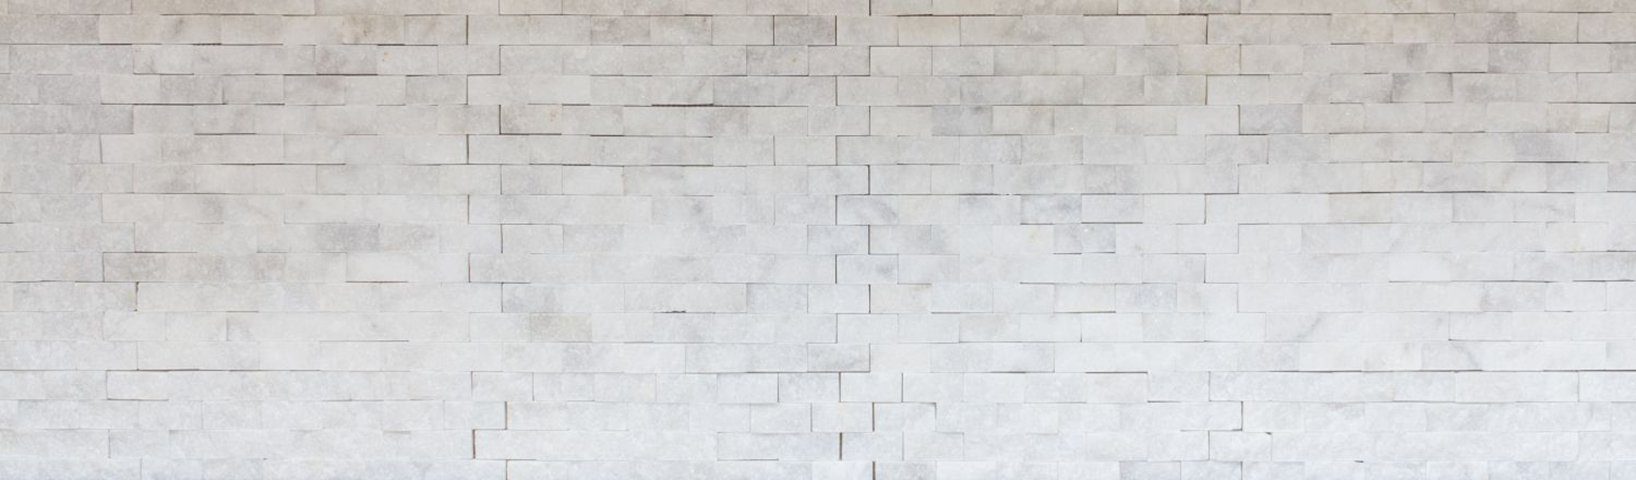 Mosani Mosaikfliesen Splitface Marmor Mosaik Brick Naturstein weiß Steinwand Mauerverband